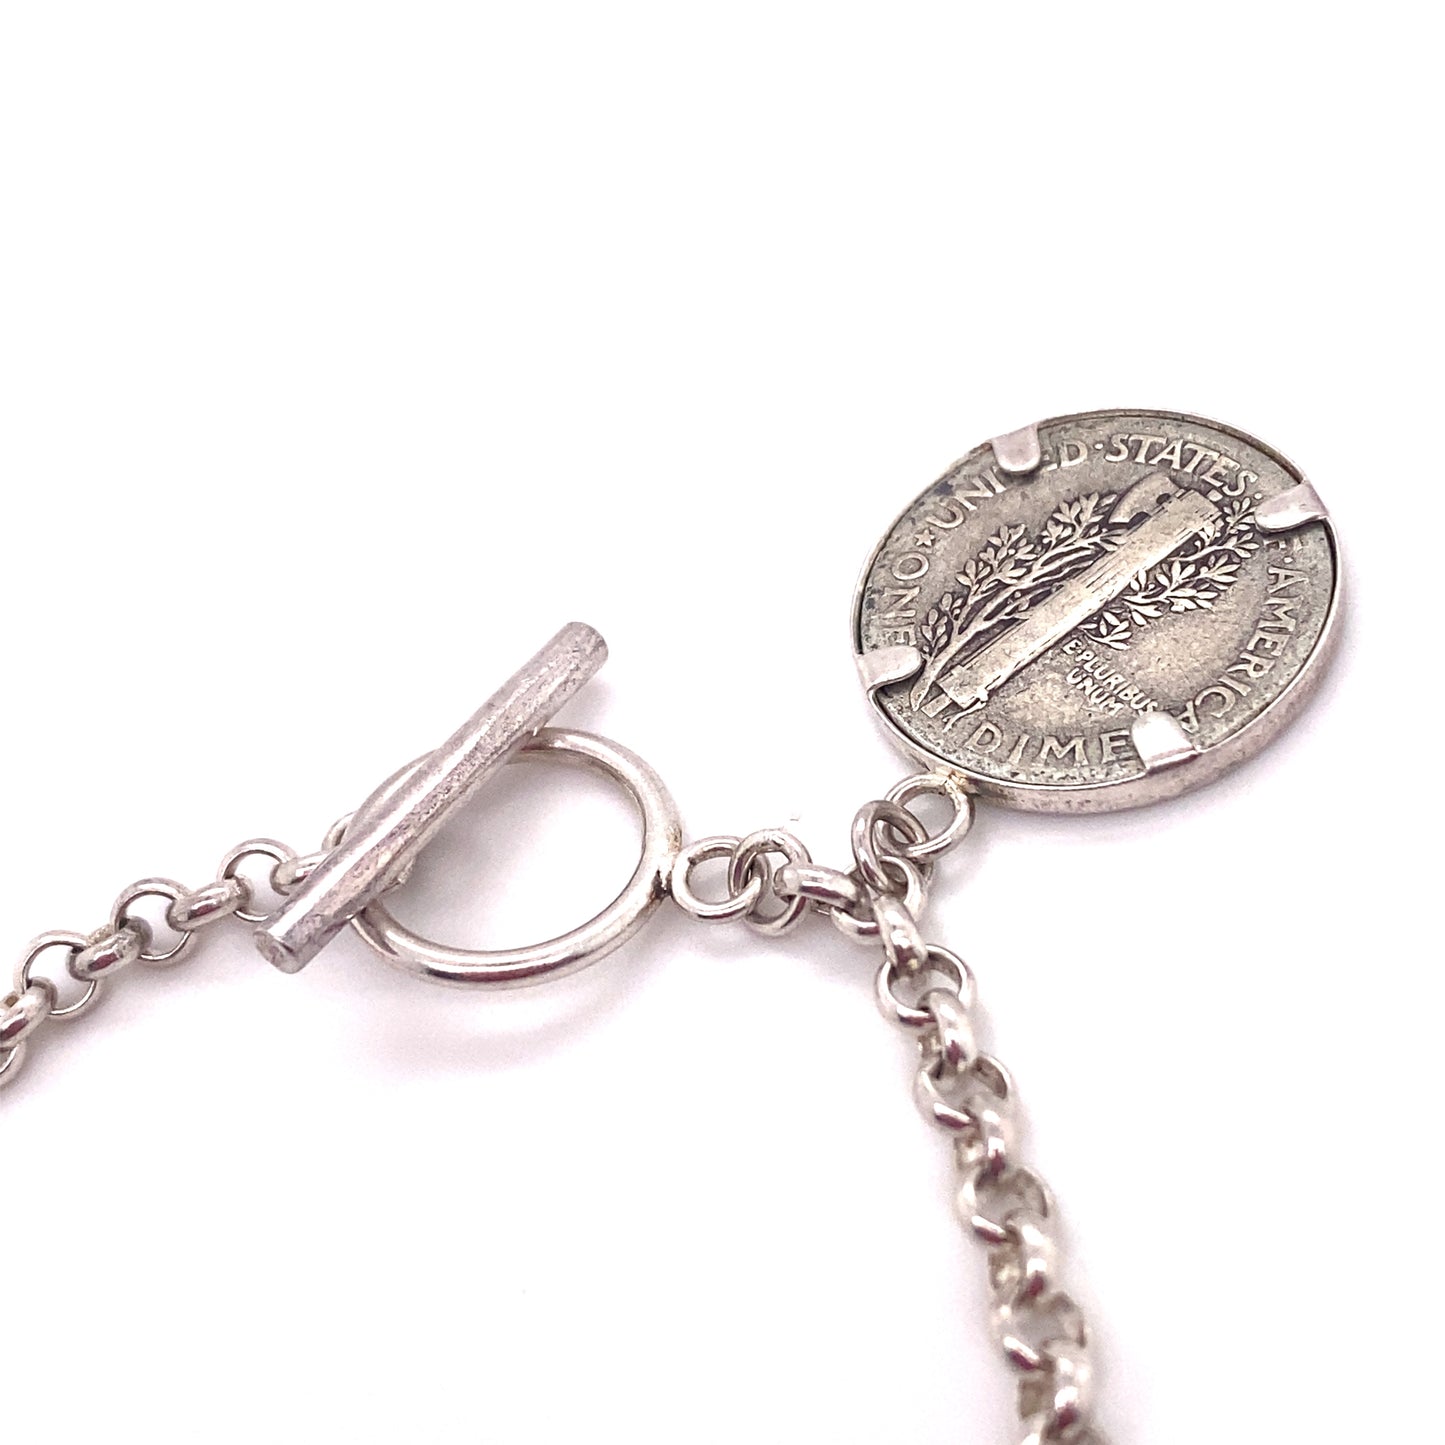 Circa 1940s Mercury Dime Charm Chain Bracelet in Sterling Silver